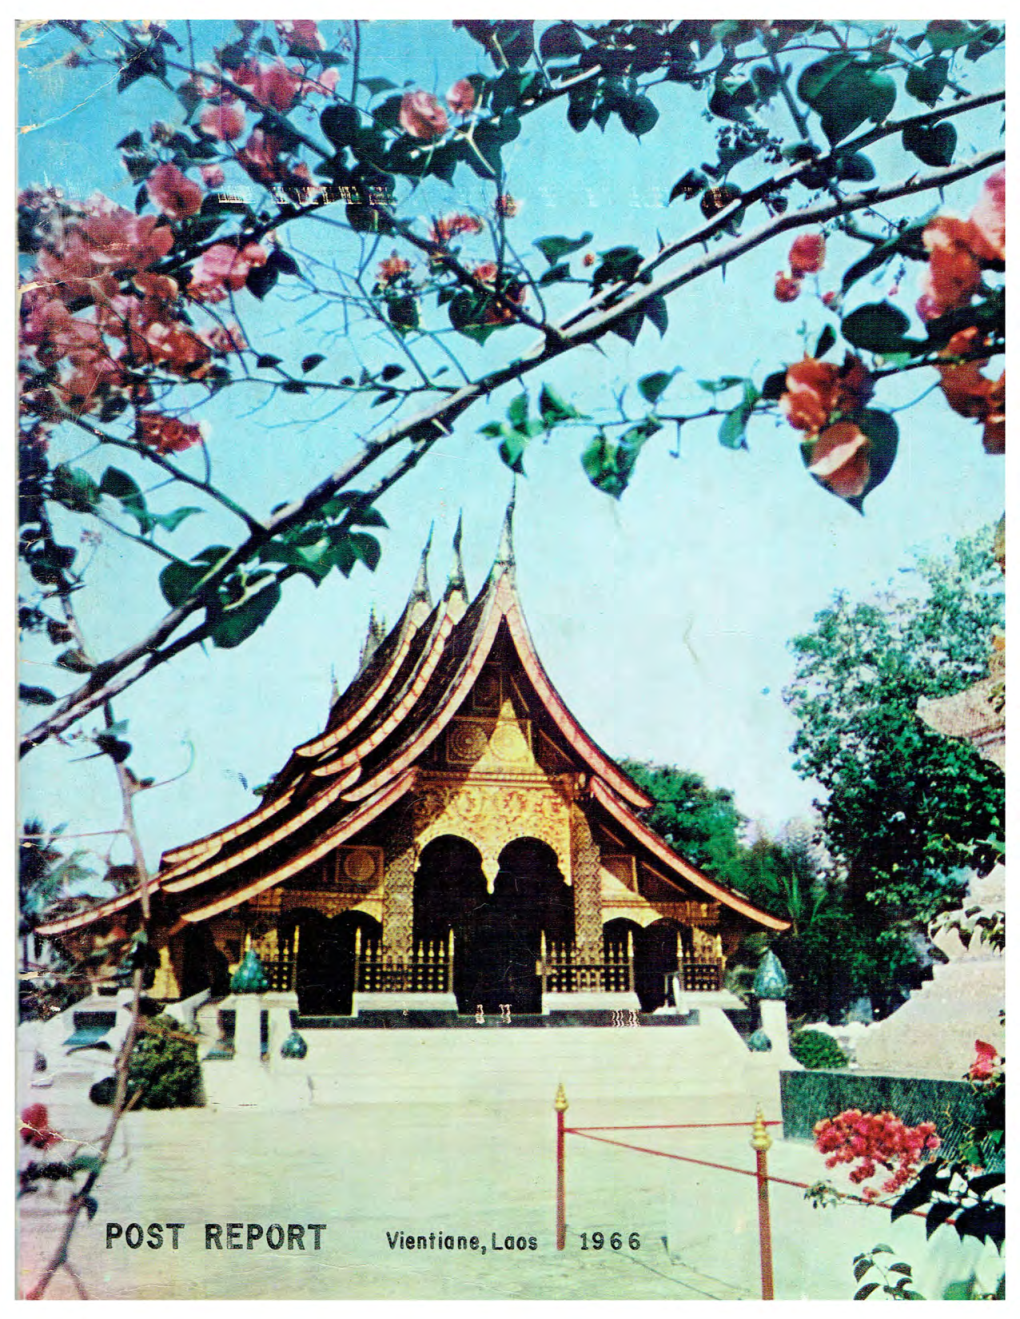 POST REPORT Vientiane, Laos 19 6 6 POST REPORT